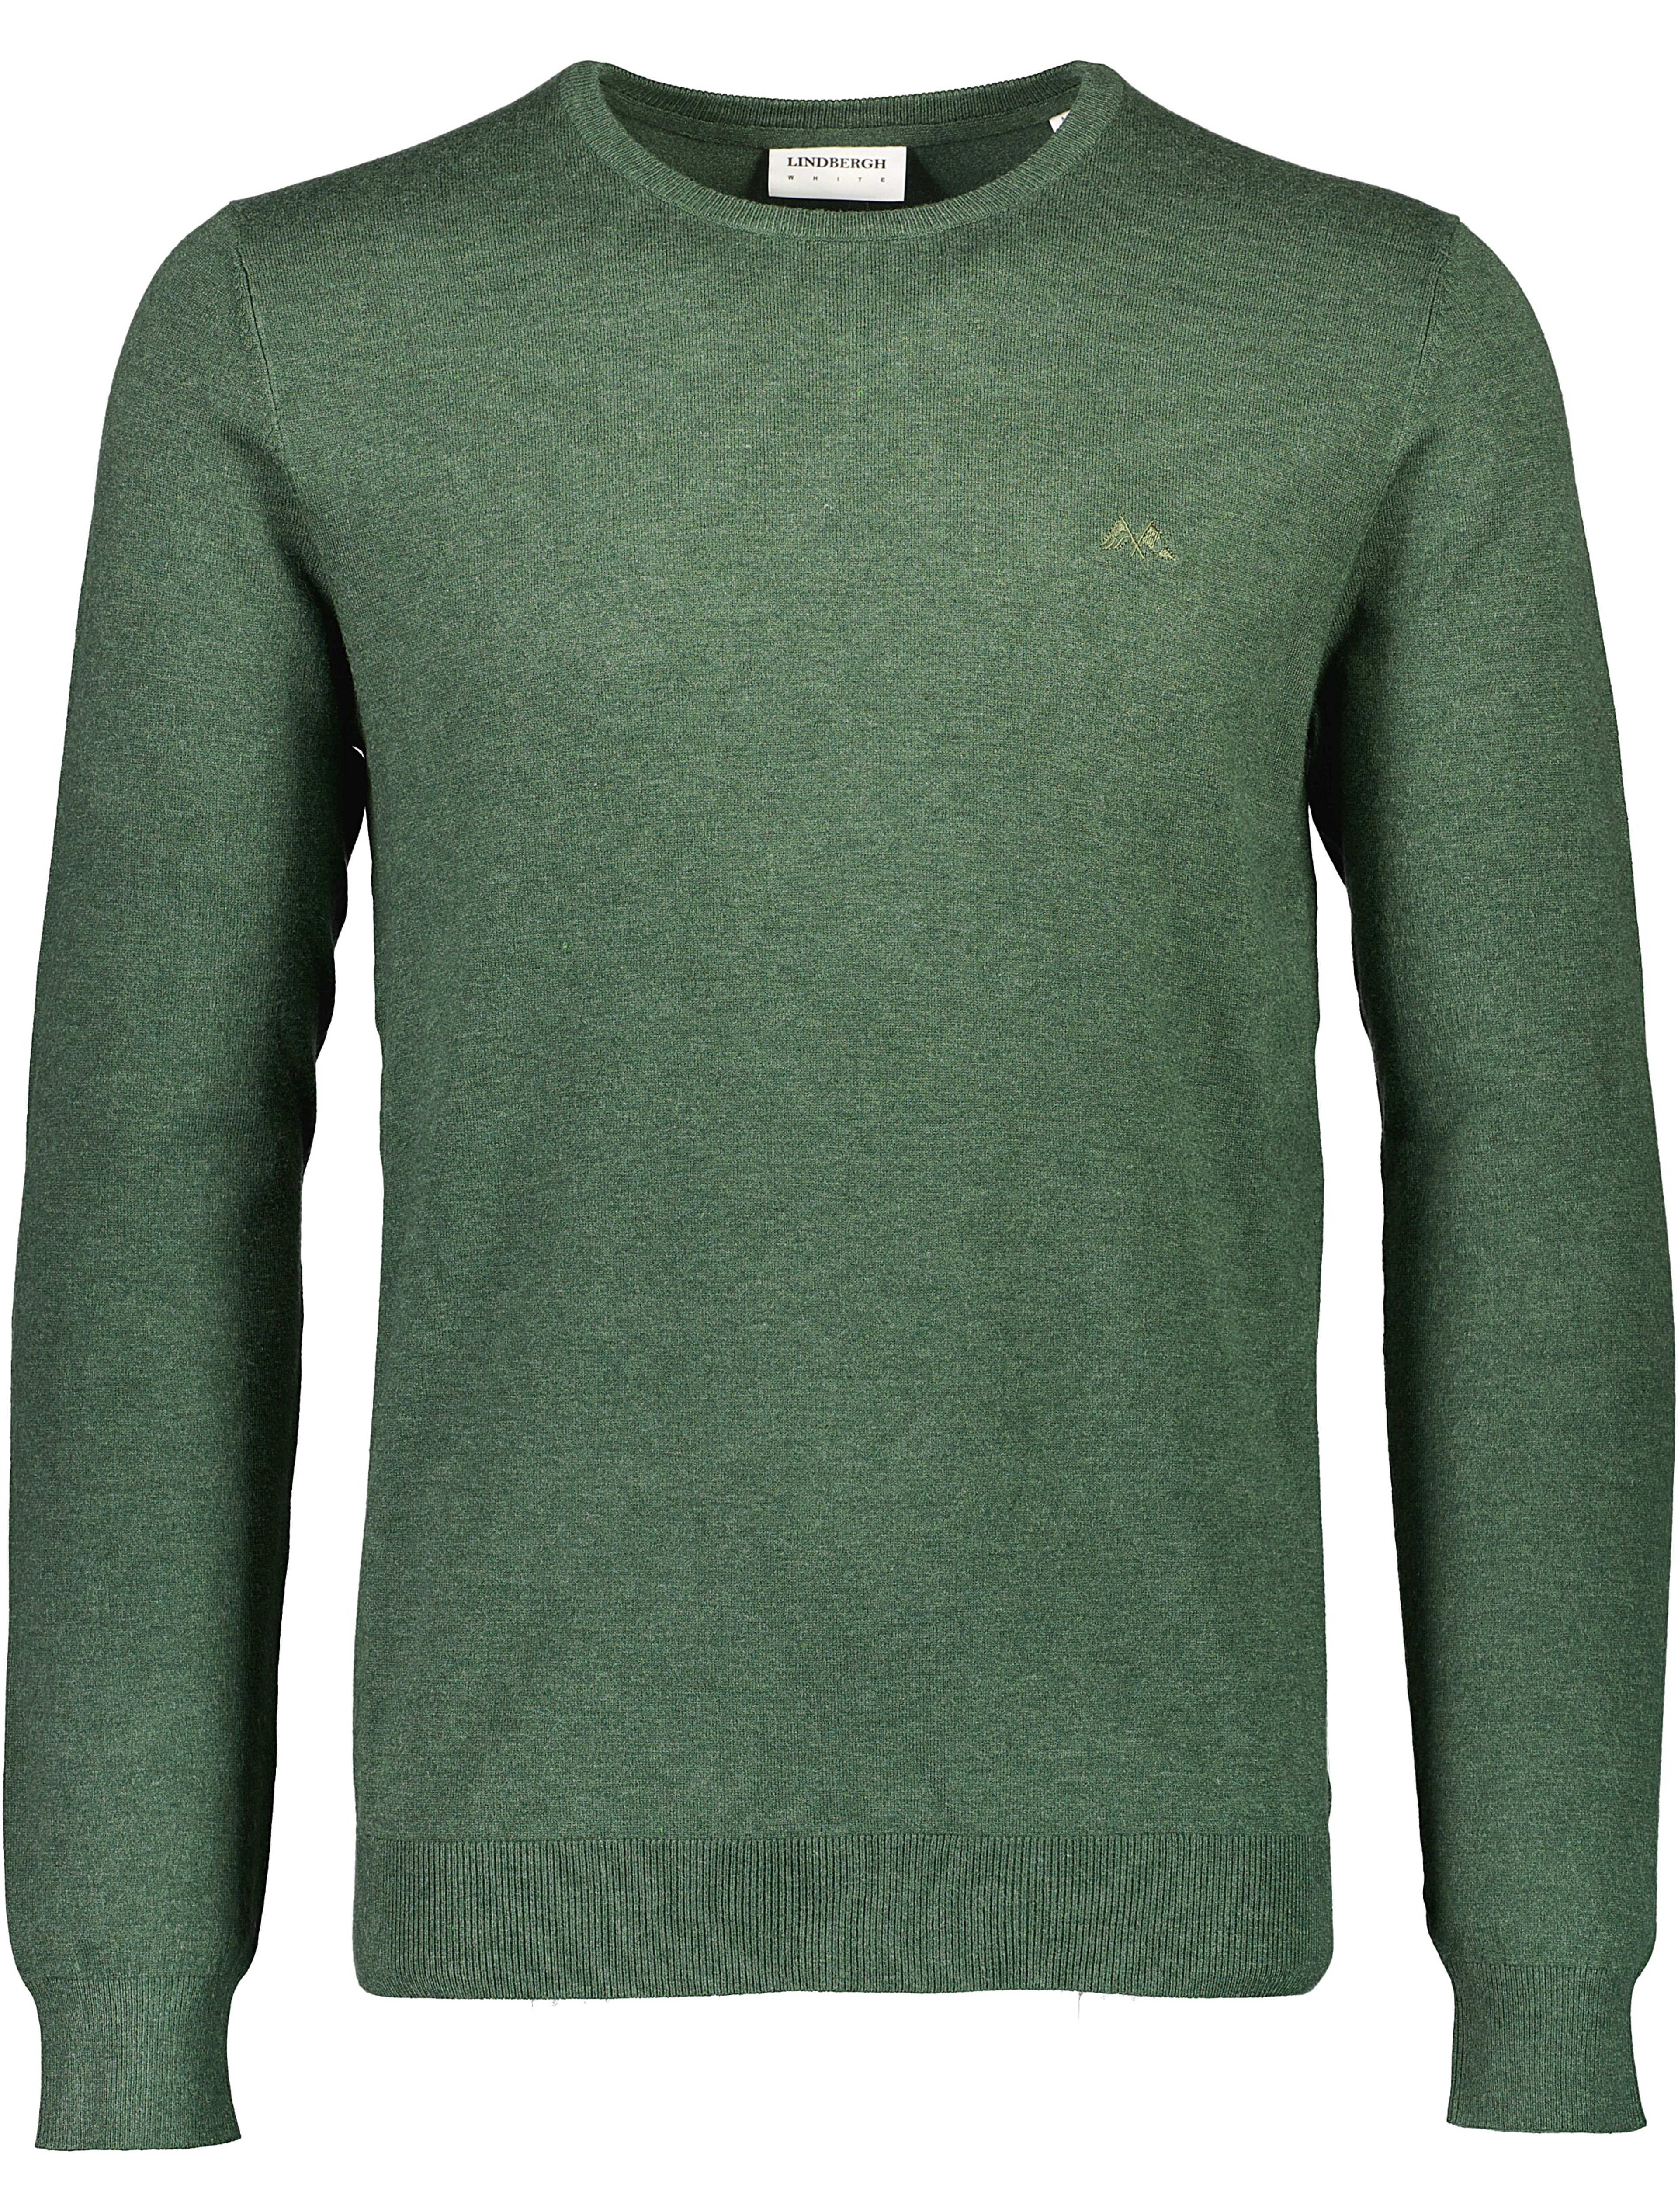 Lindbergh Knitwear green / dk green